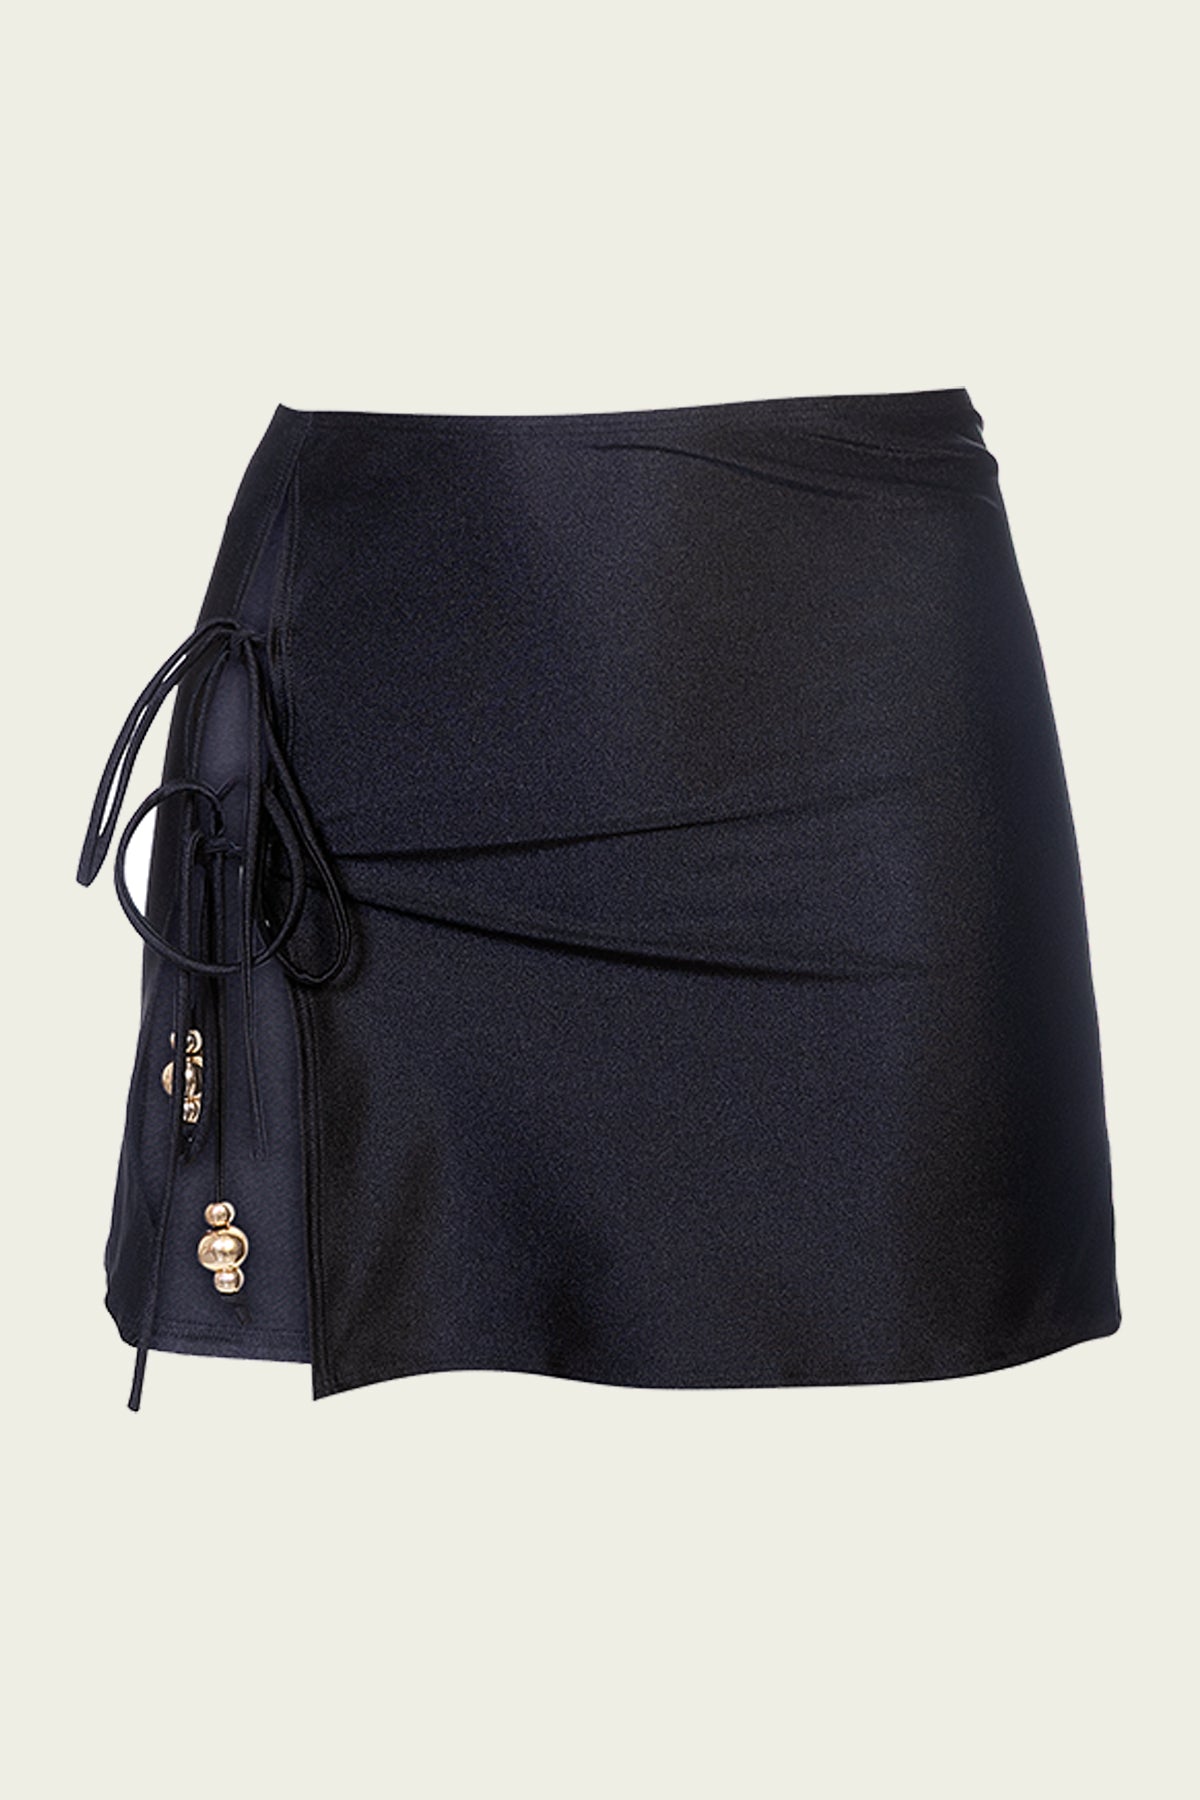 Kourtney Mini Skirt in Black - shop-olivia.com